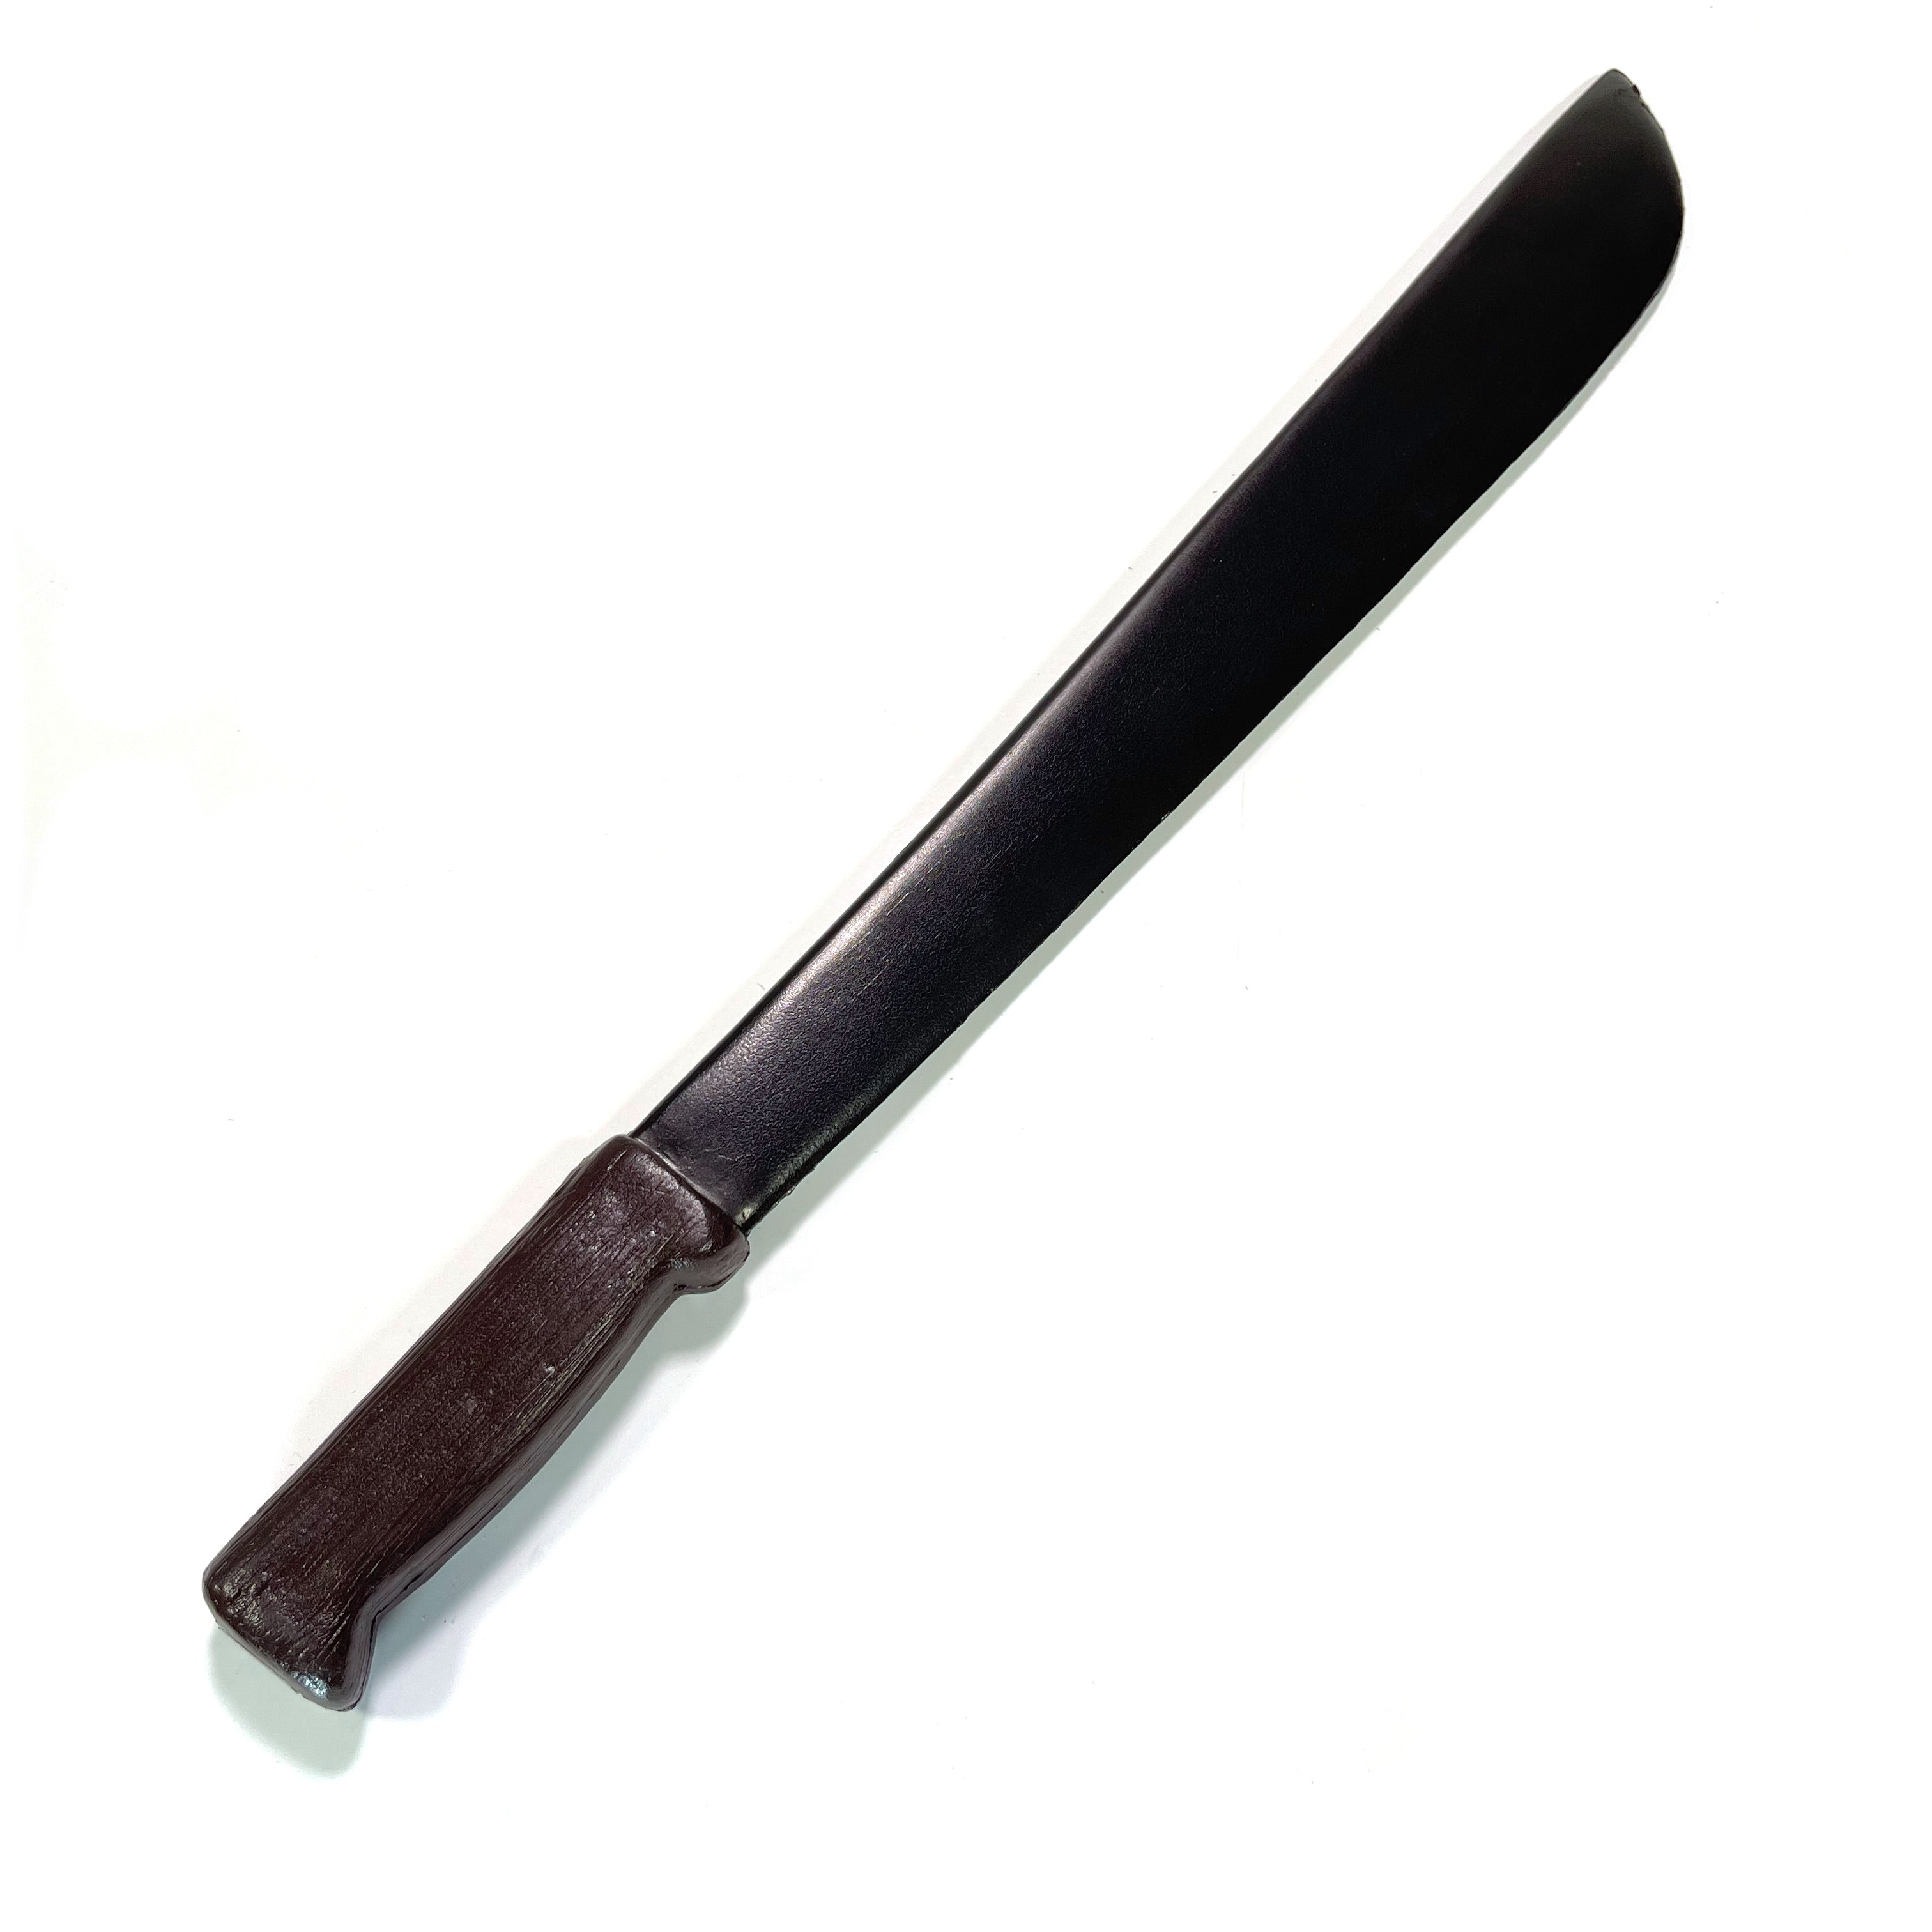 Large Jungle Machete Hand Axe Foam Rubber Prop Knife - BLACK Blade